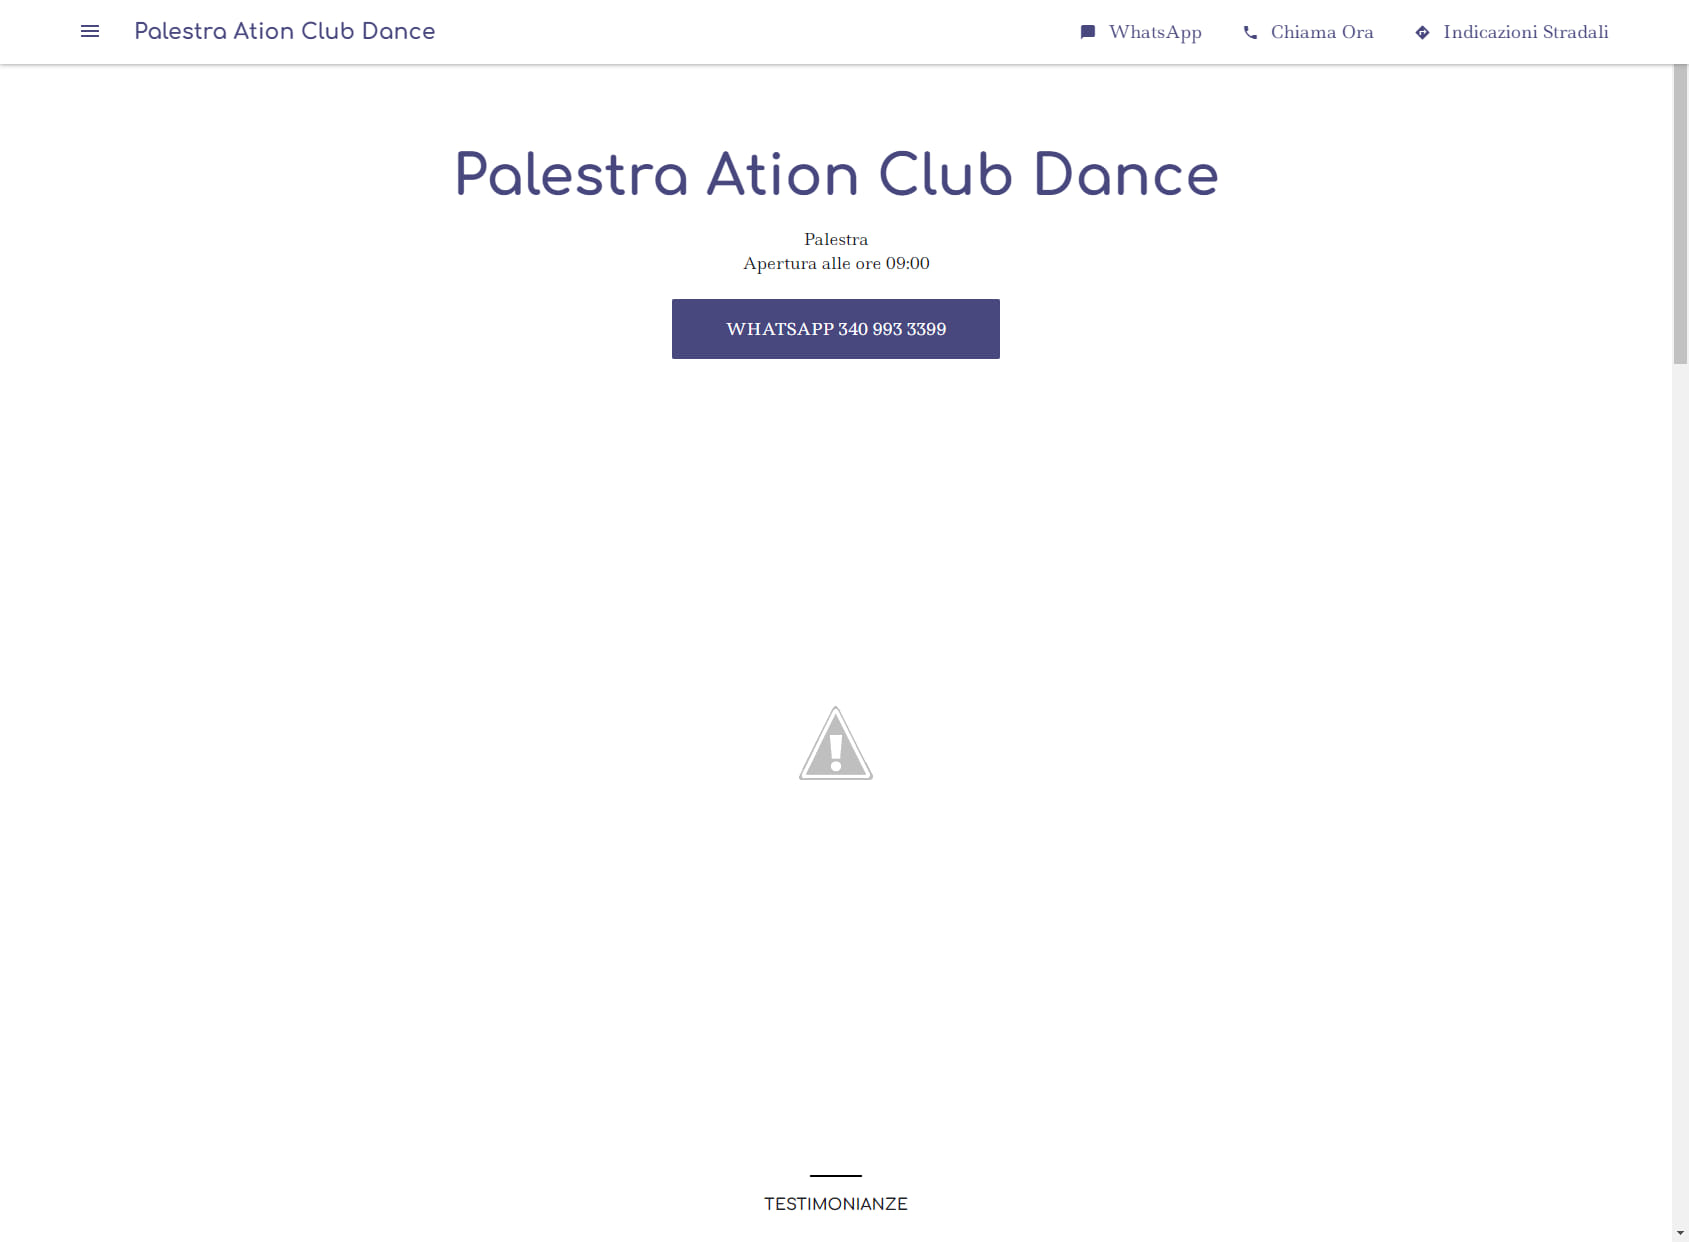 Palestra Ation Club Dance